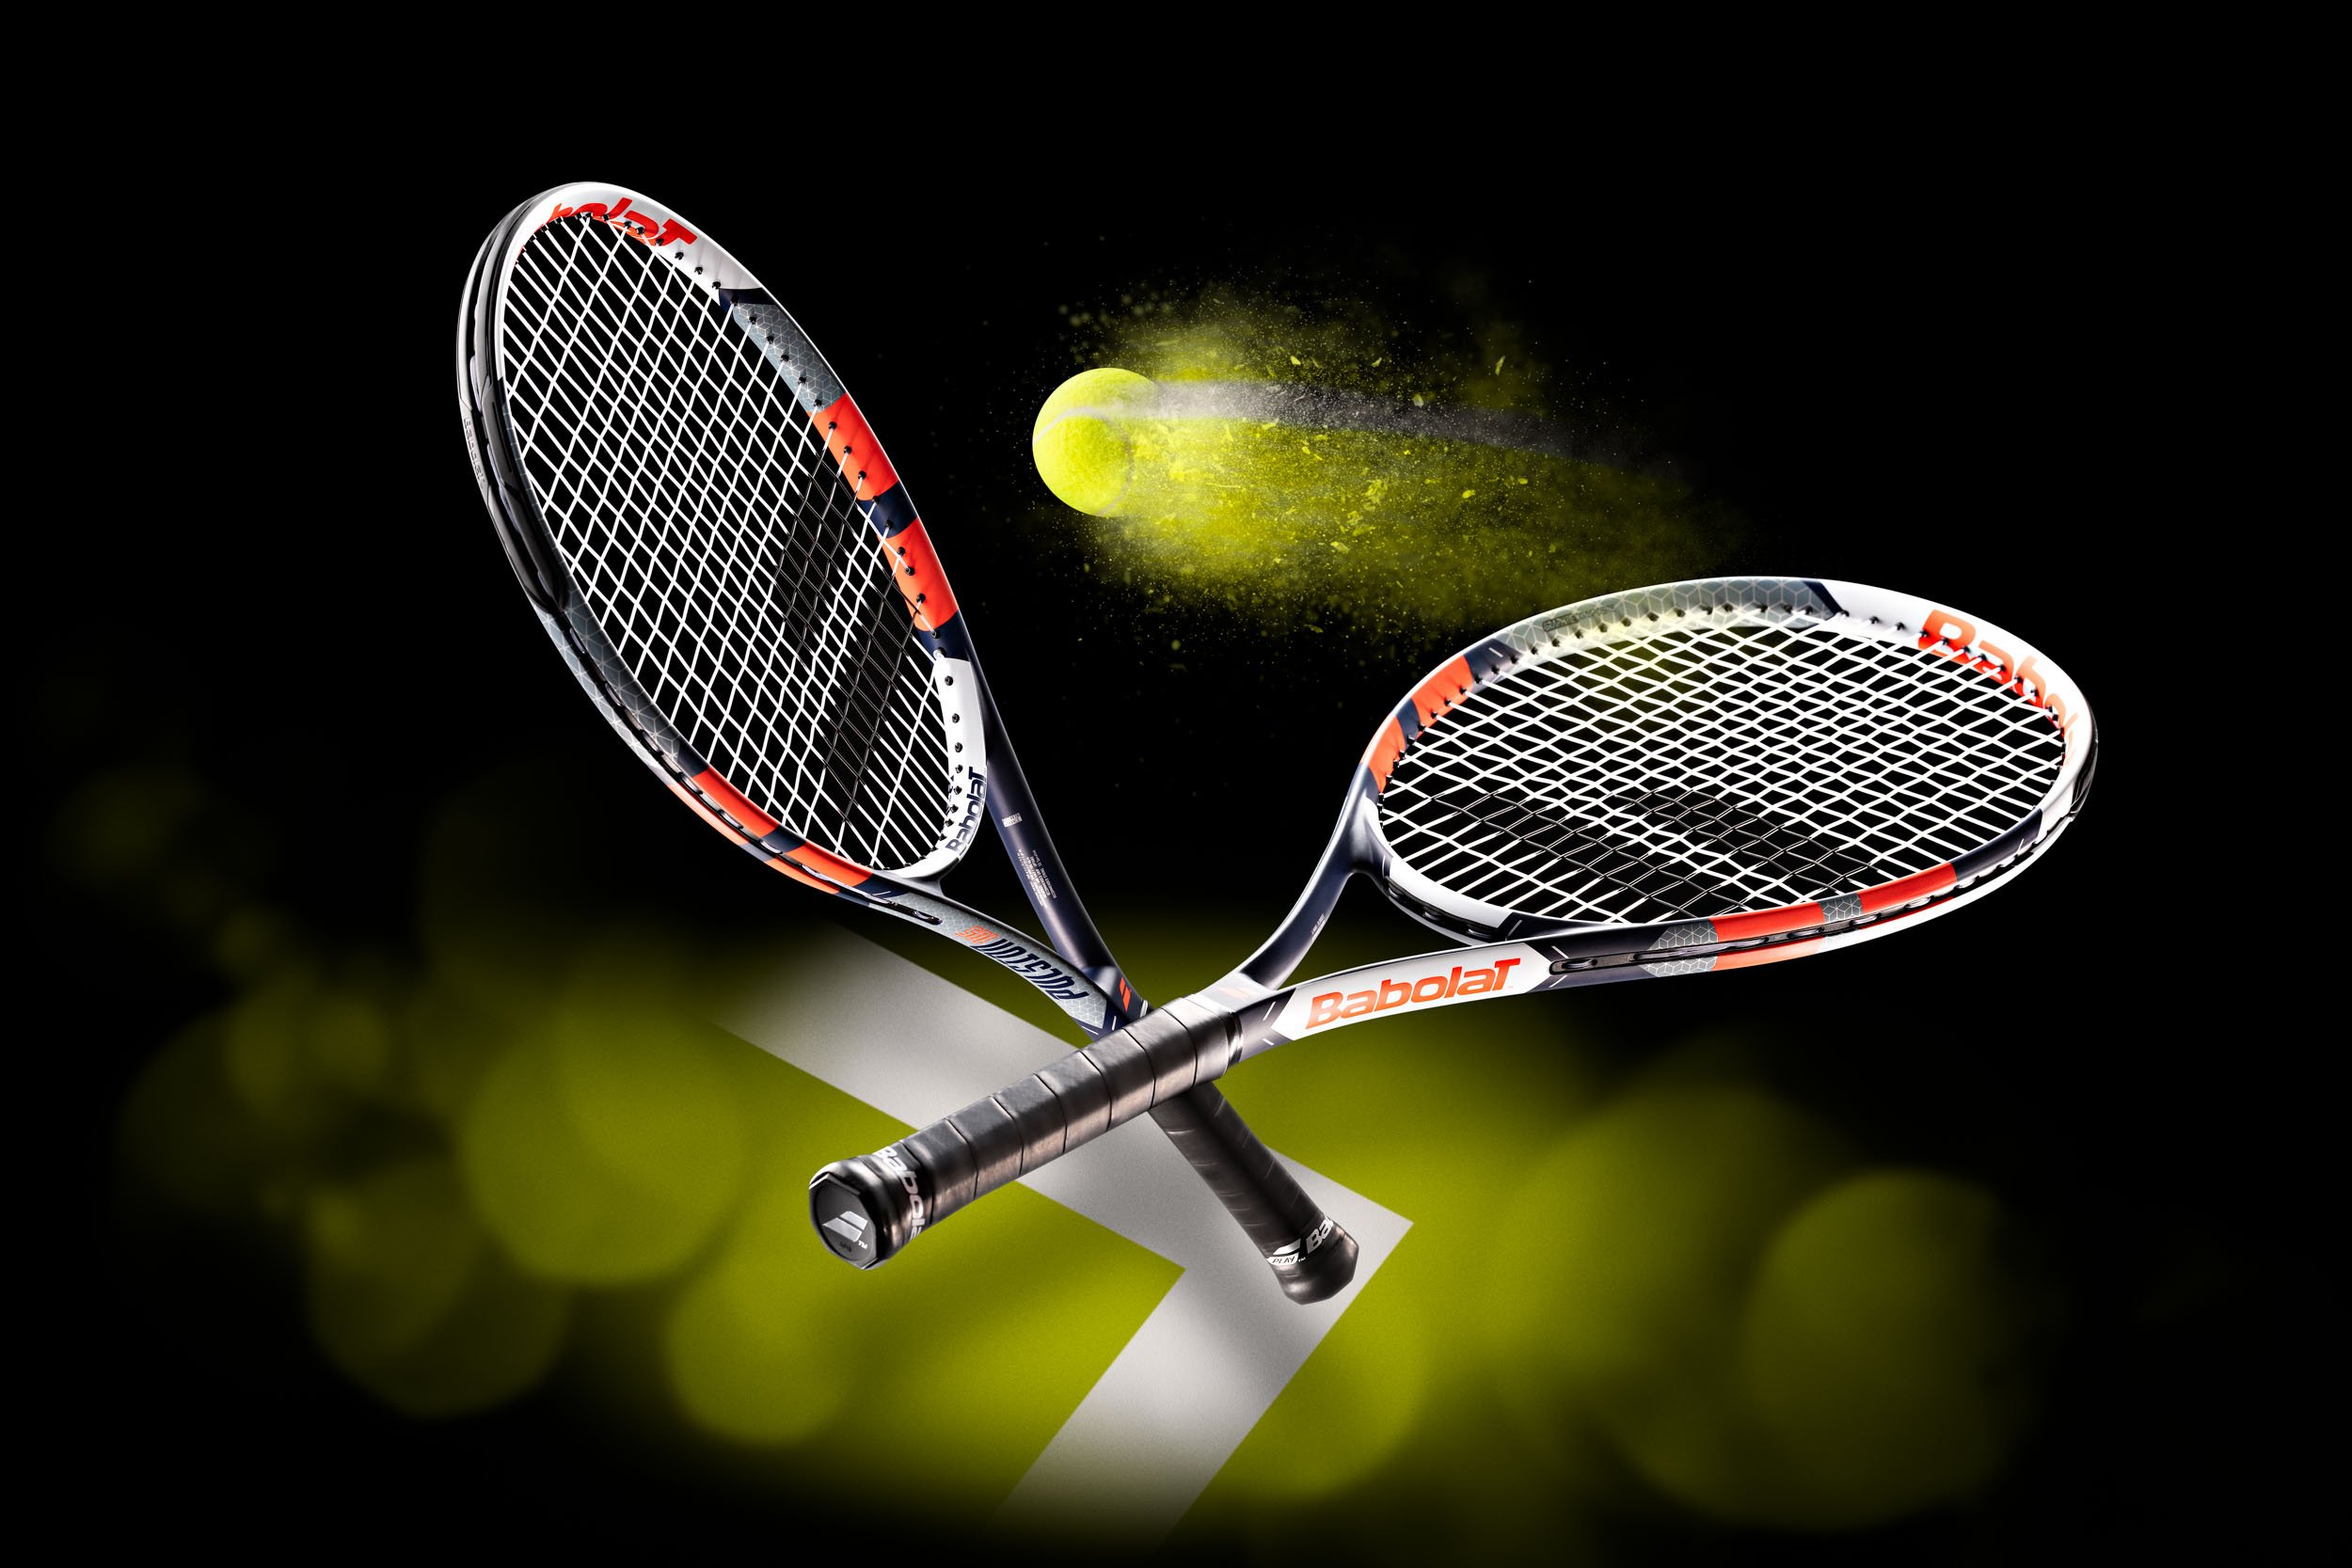 Babolat Tennis Racket | Commercial Product Shot (Copy)